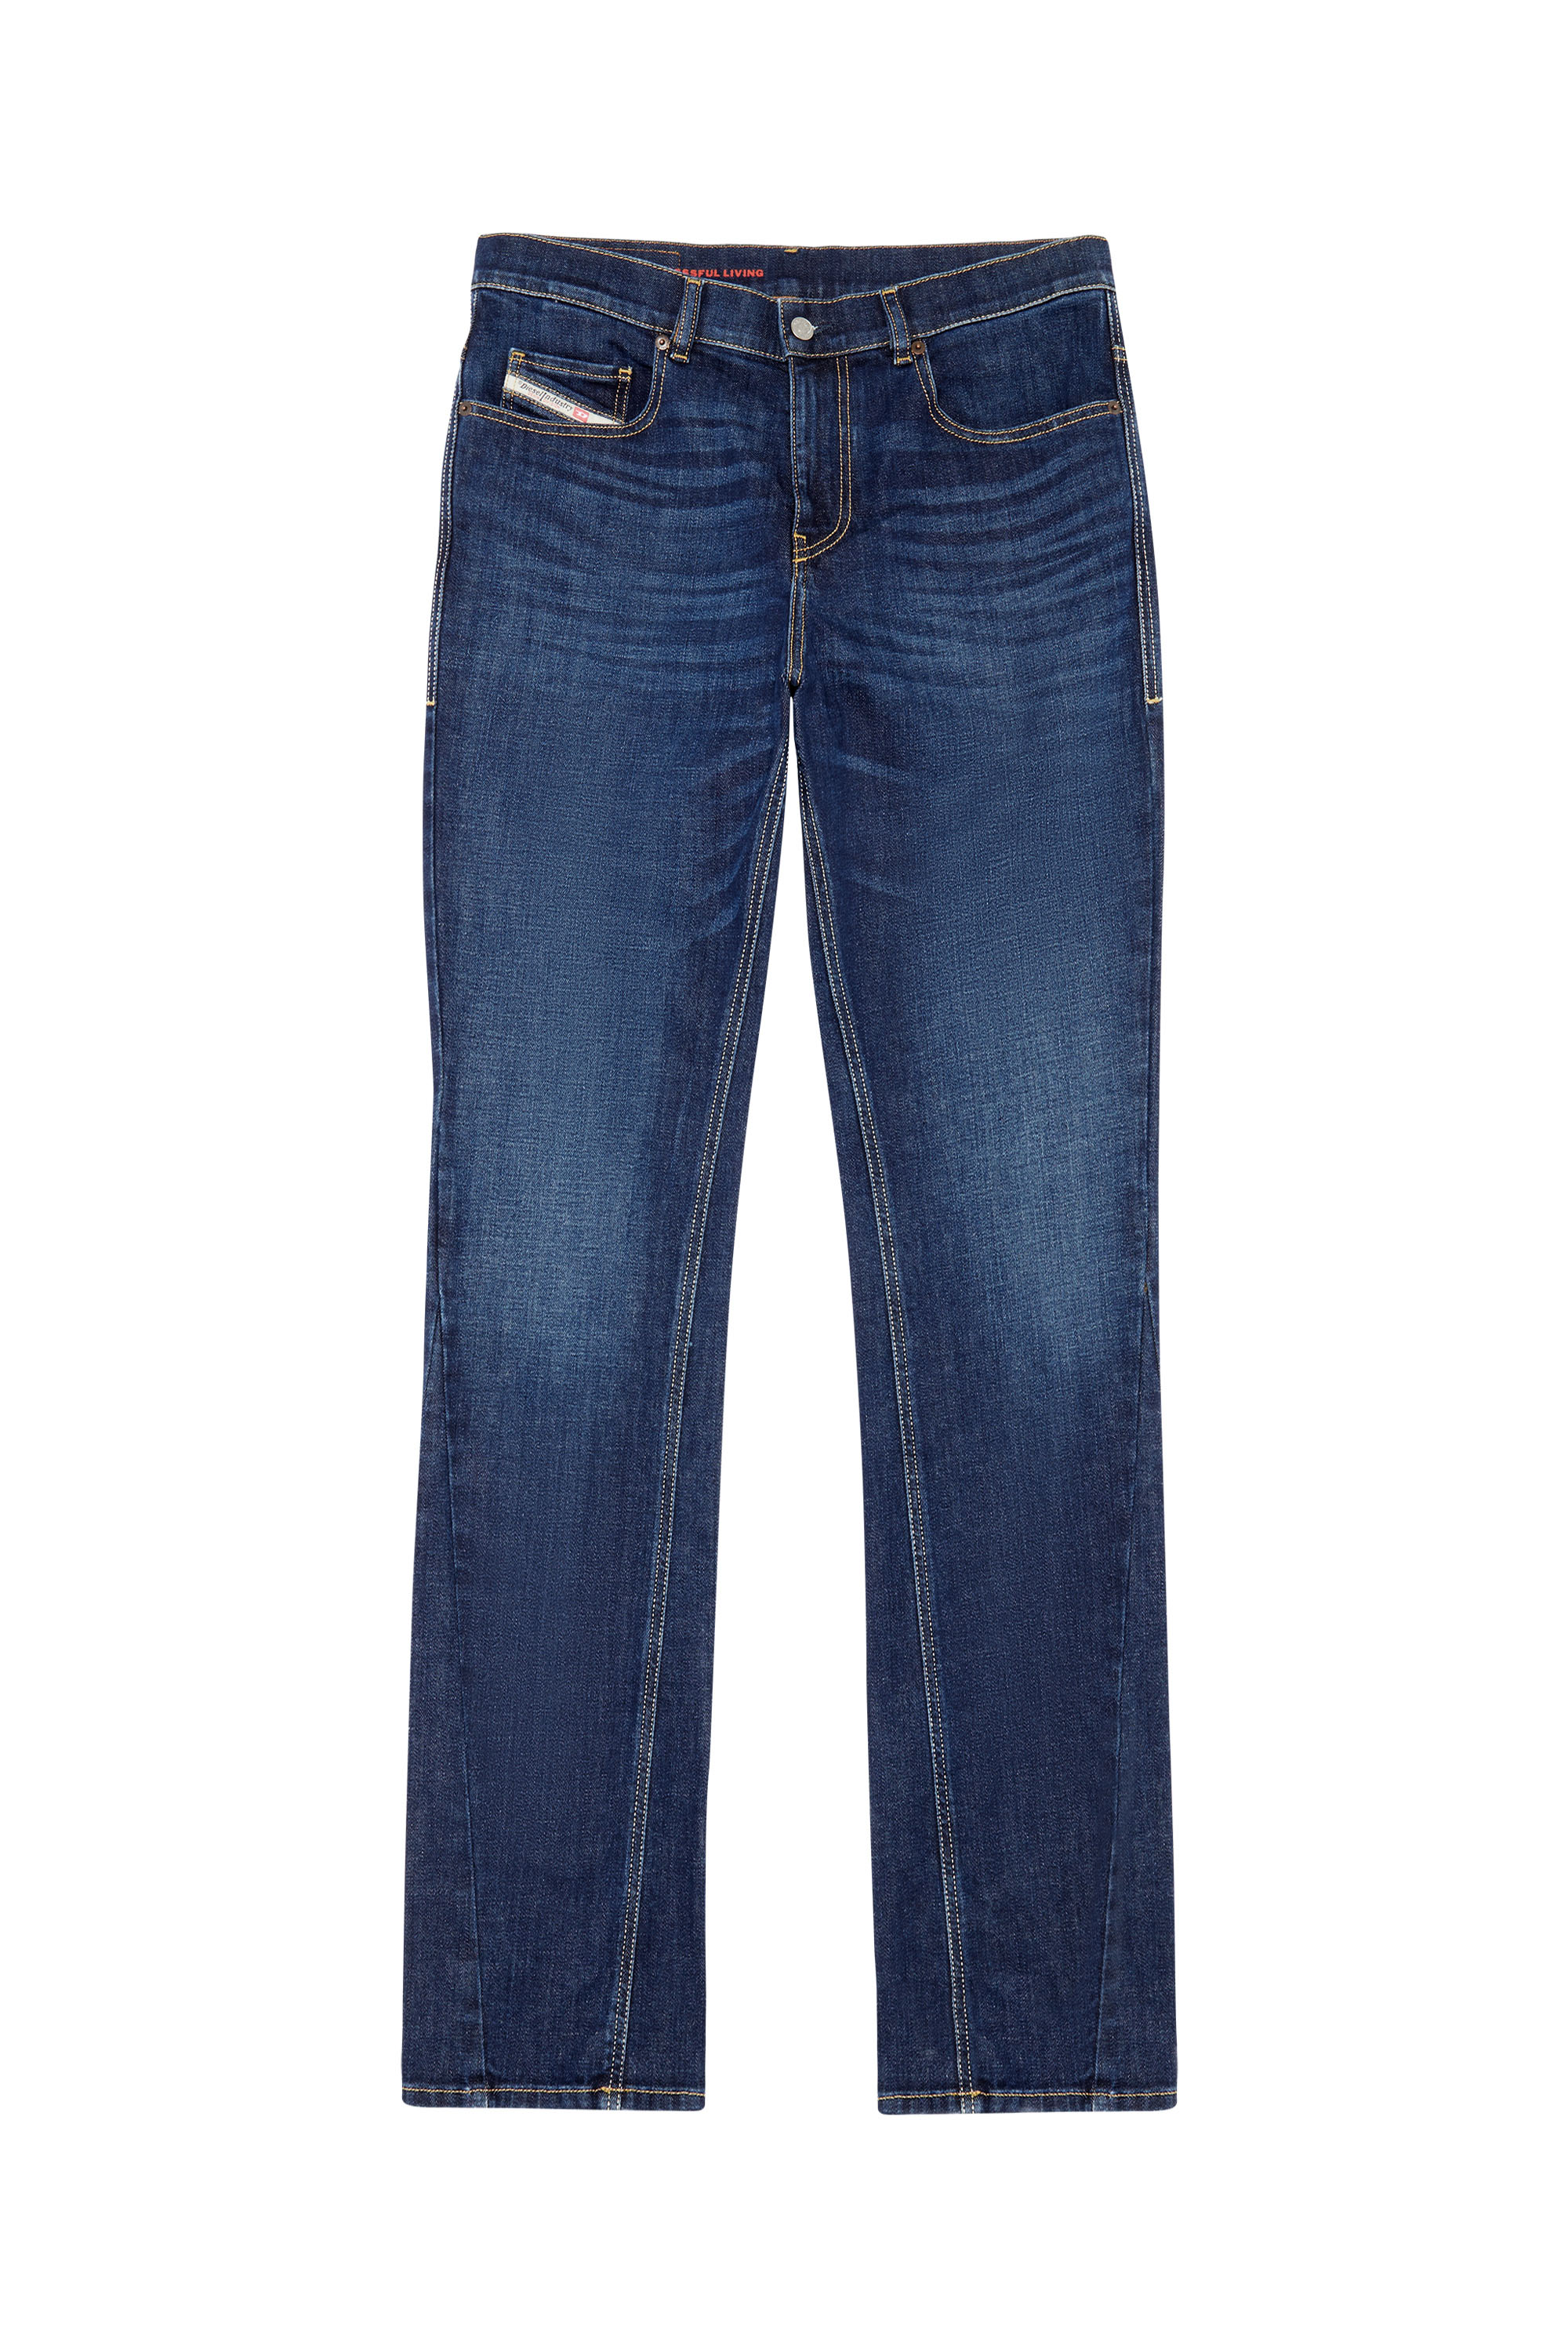 2021 D-VOCS 09B90 Bootcut Jeans, Dark Blue - Jeans